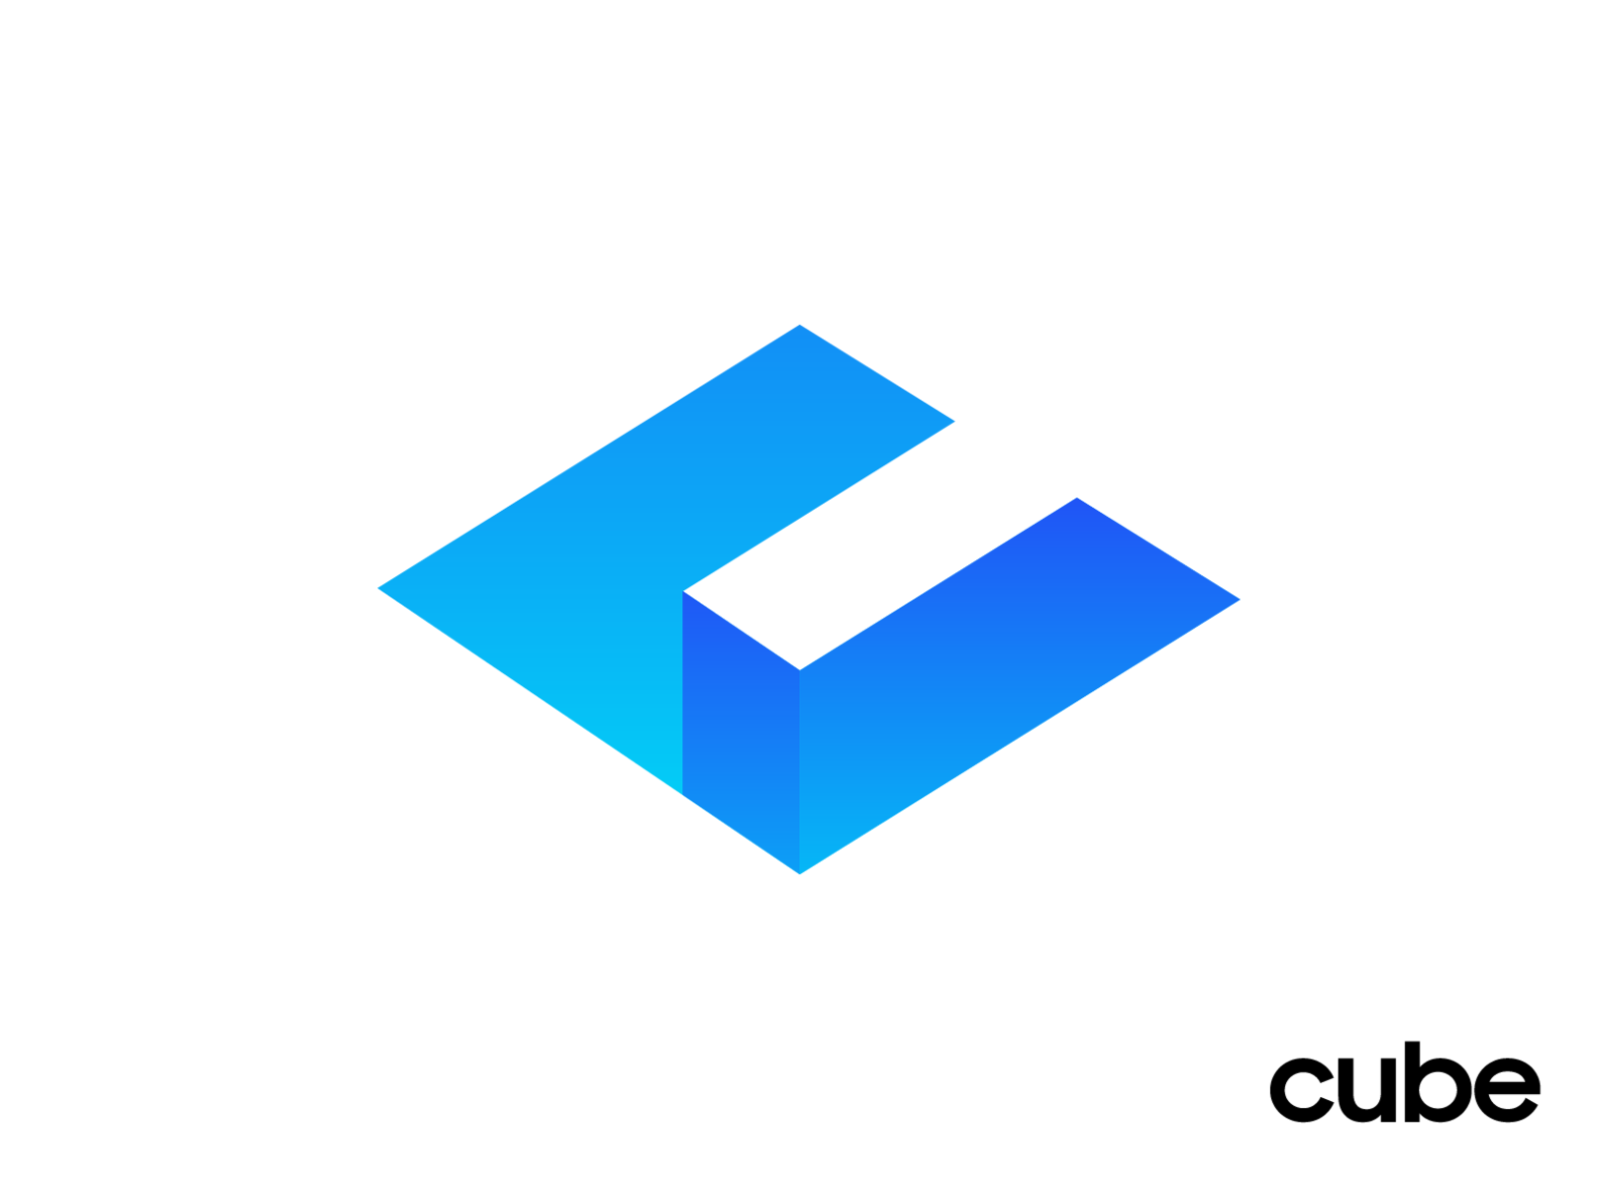 Cube apps. Синие квадраты лого. Cube logo.